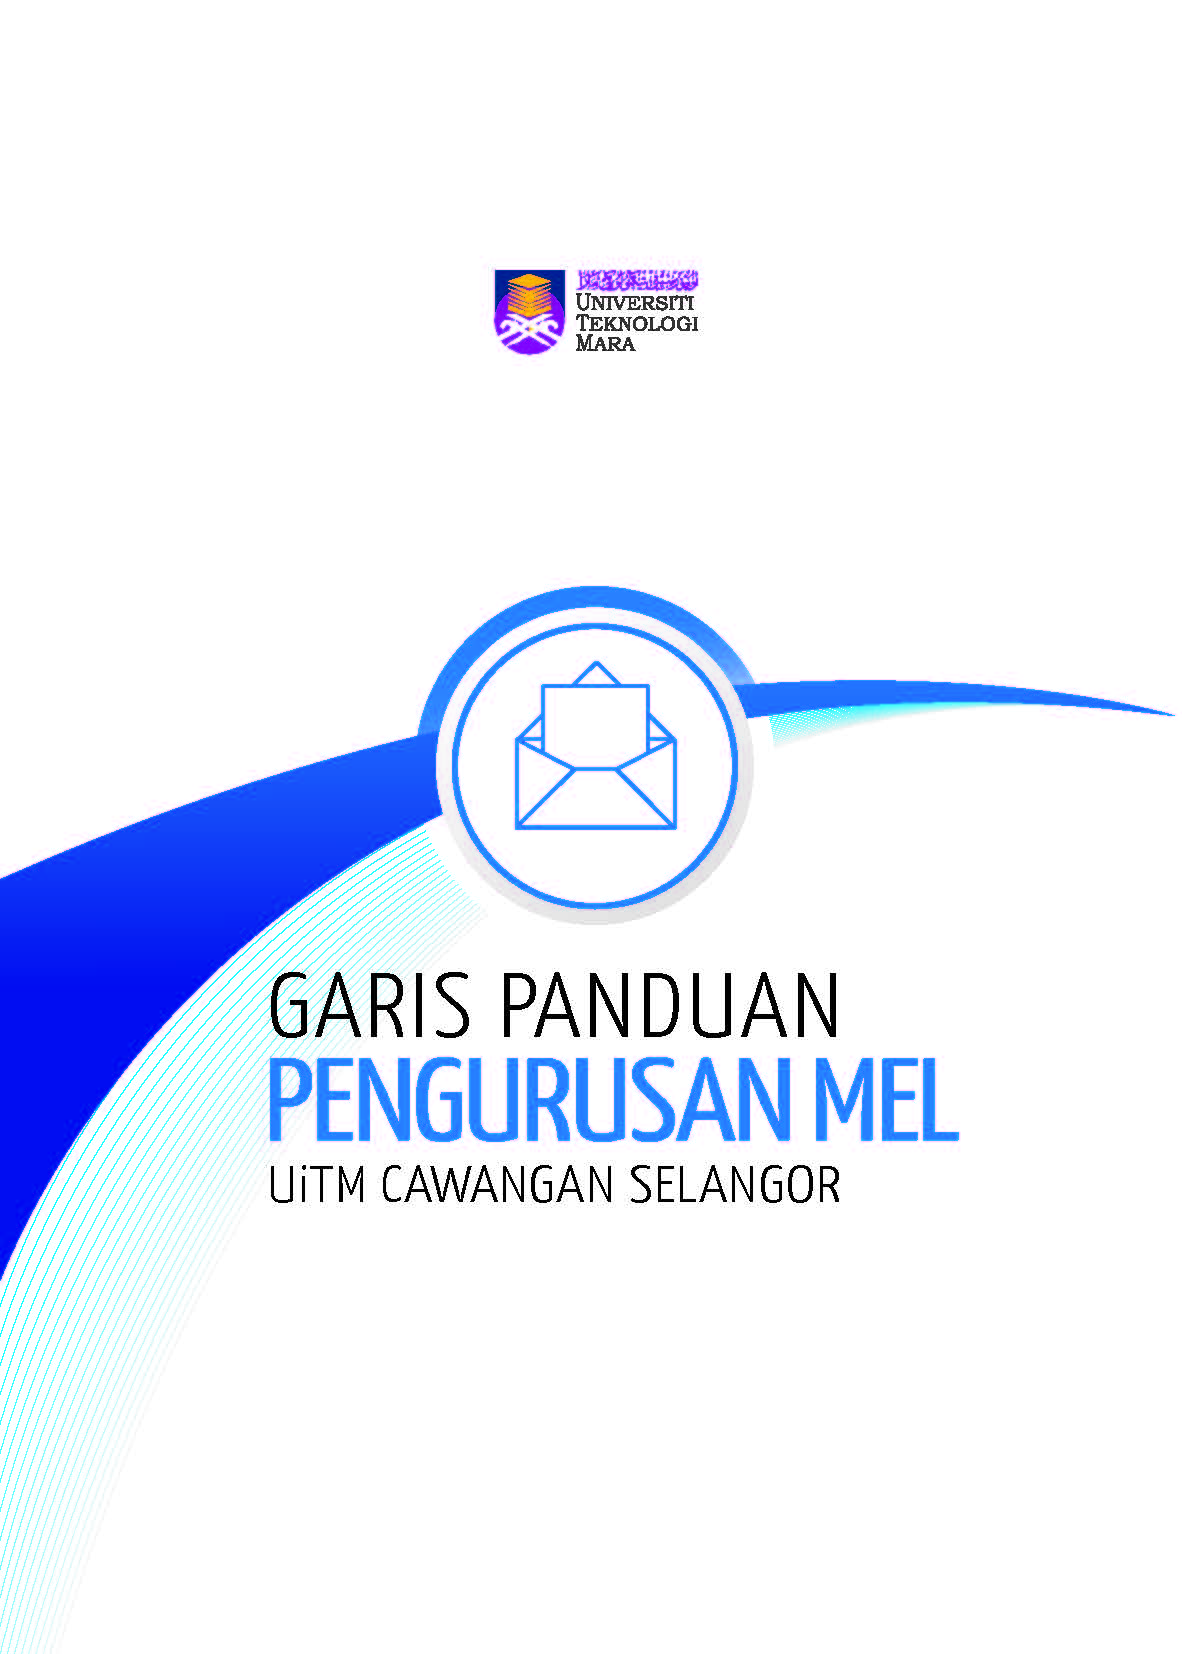 Garis Panduan Pengurusan Emel UiTM Cawangan Selangor